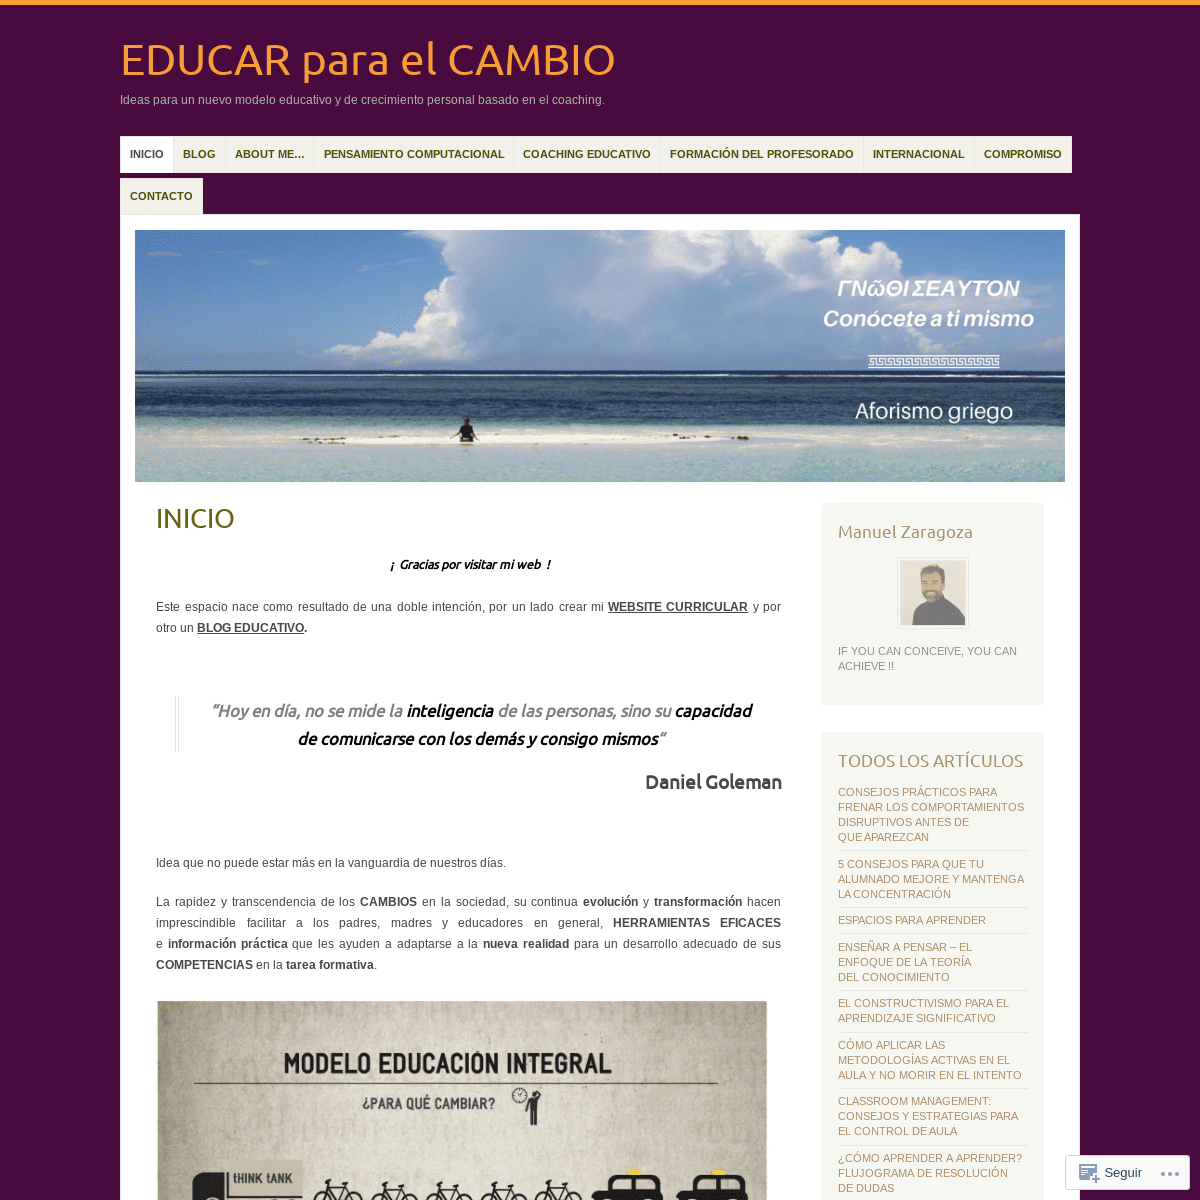 A complete backup of educarparaelcambio.com